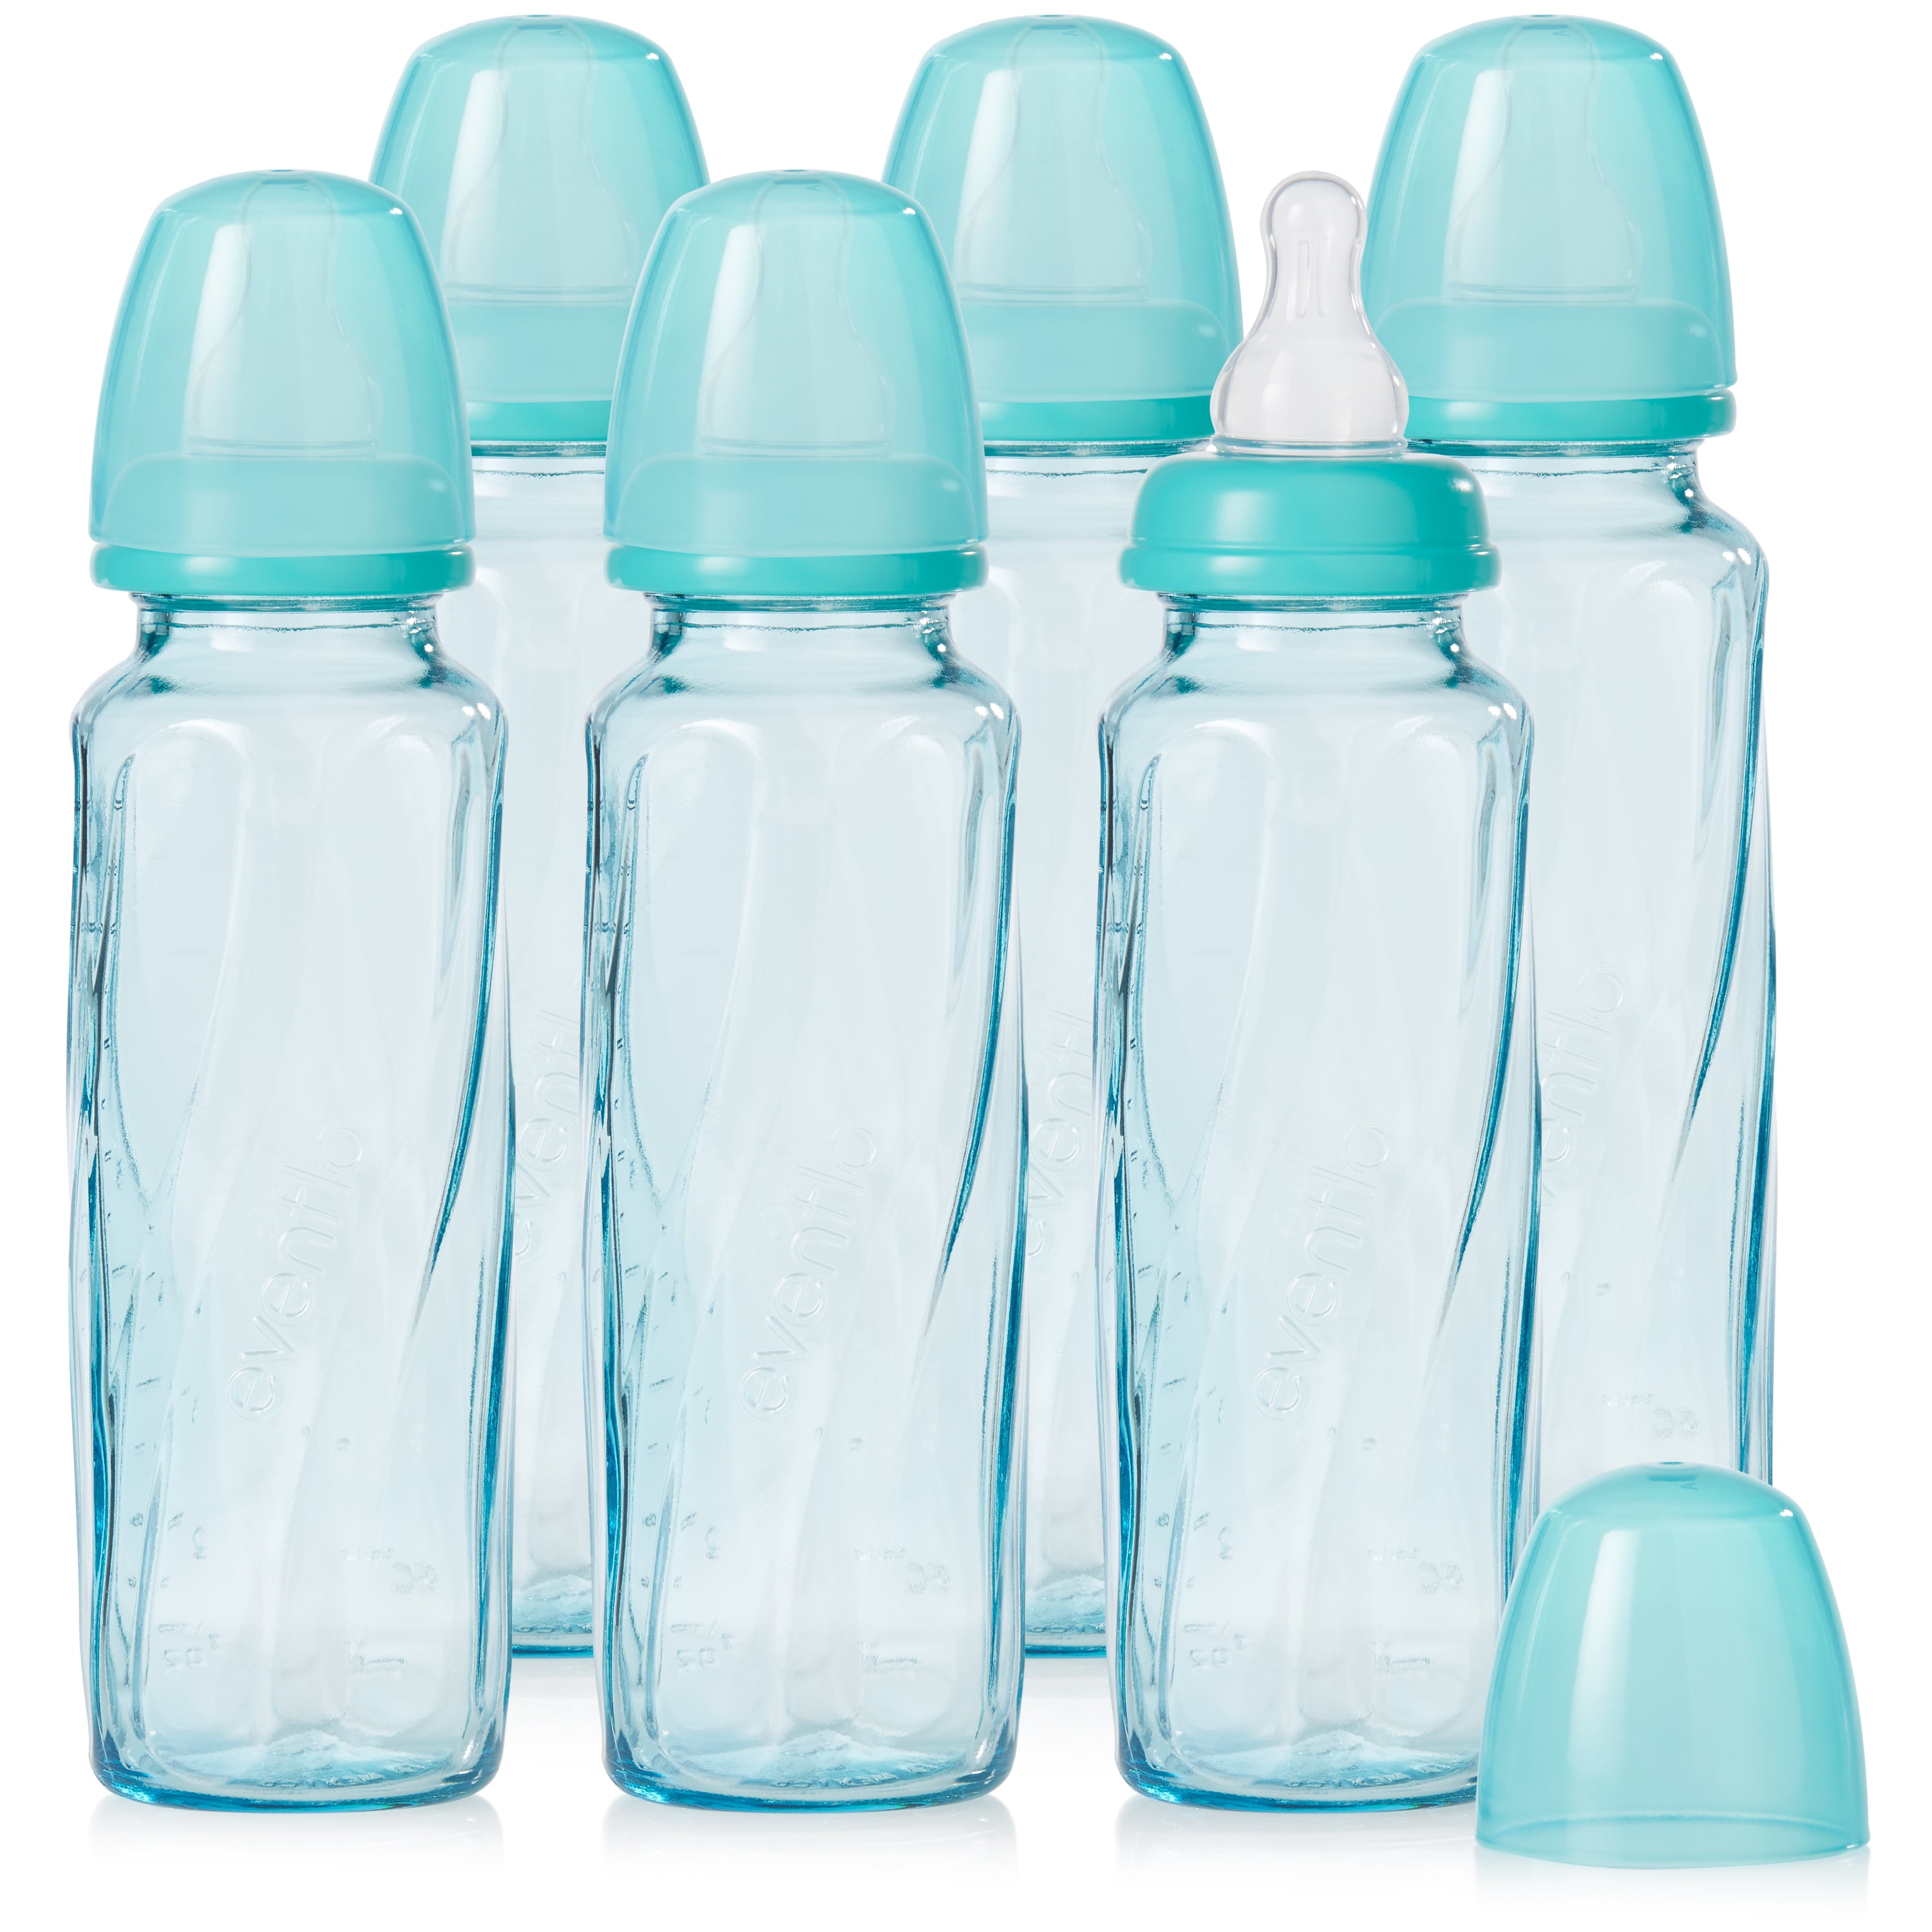 3 Pk Evenflo 4 oz or 8 oz Twist Classic Real Glass Baby Bottles BPA Free 937500 